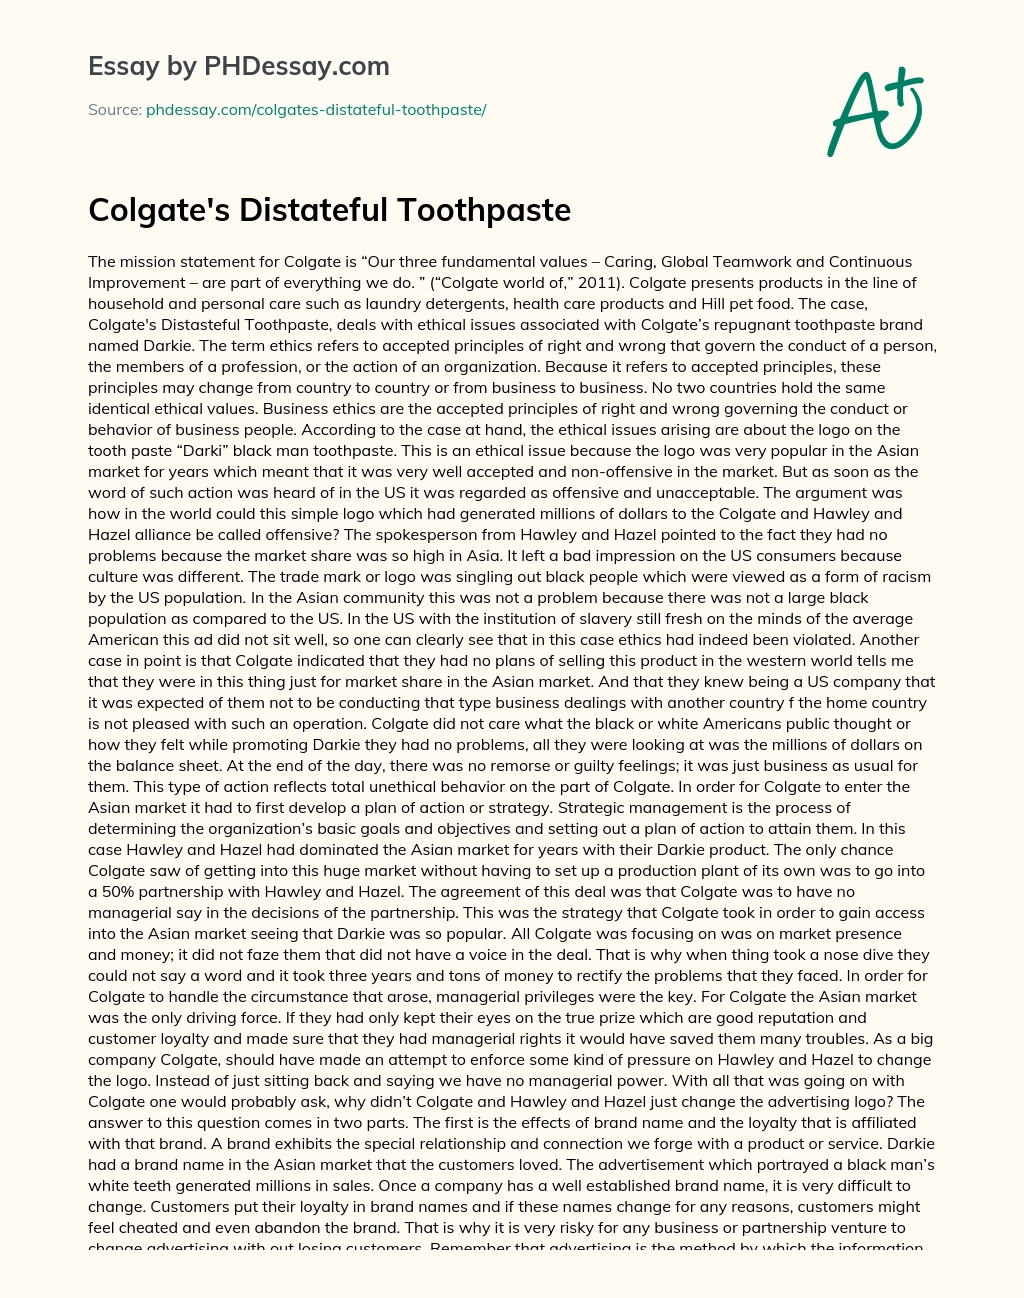 Colgate’s Distateful Toothpaste essay